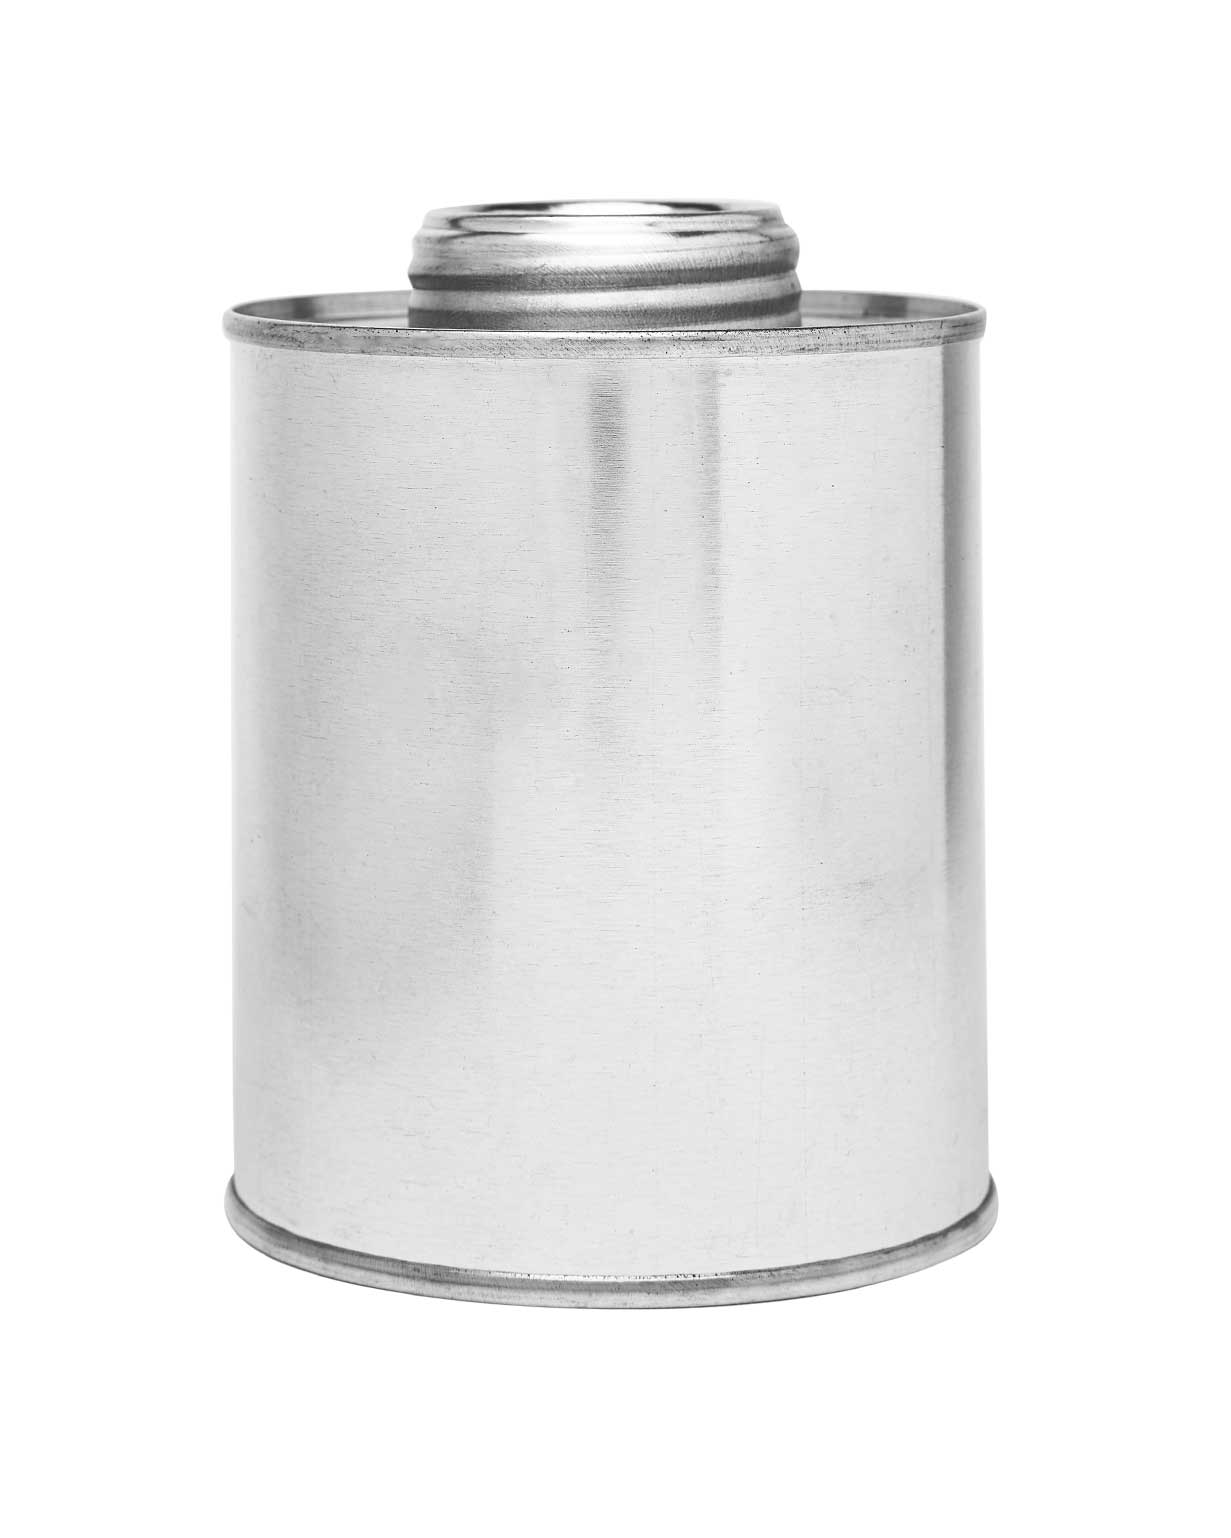 4 oz tin silver 1-3/4" international 404x414 monotop can